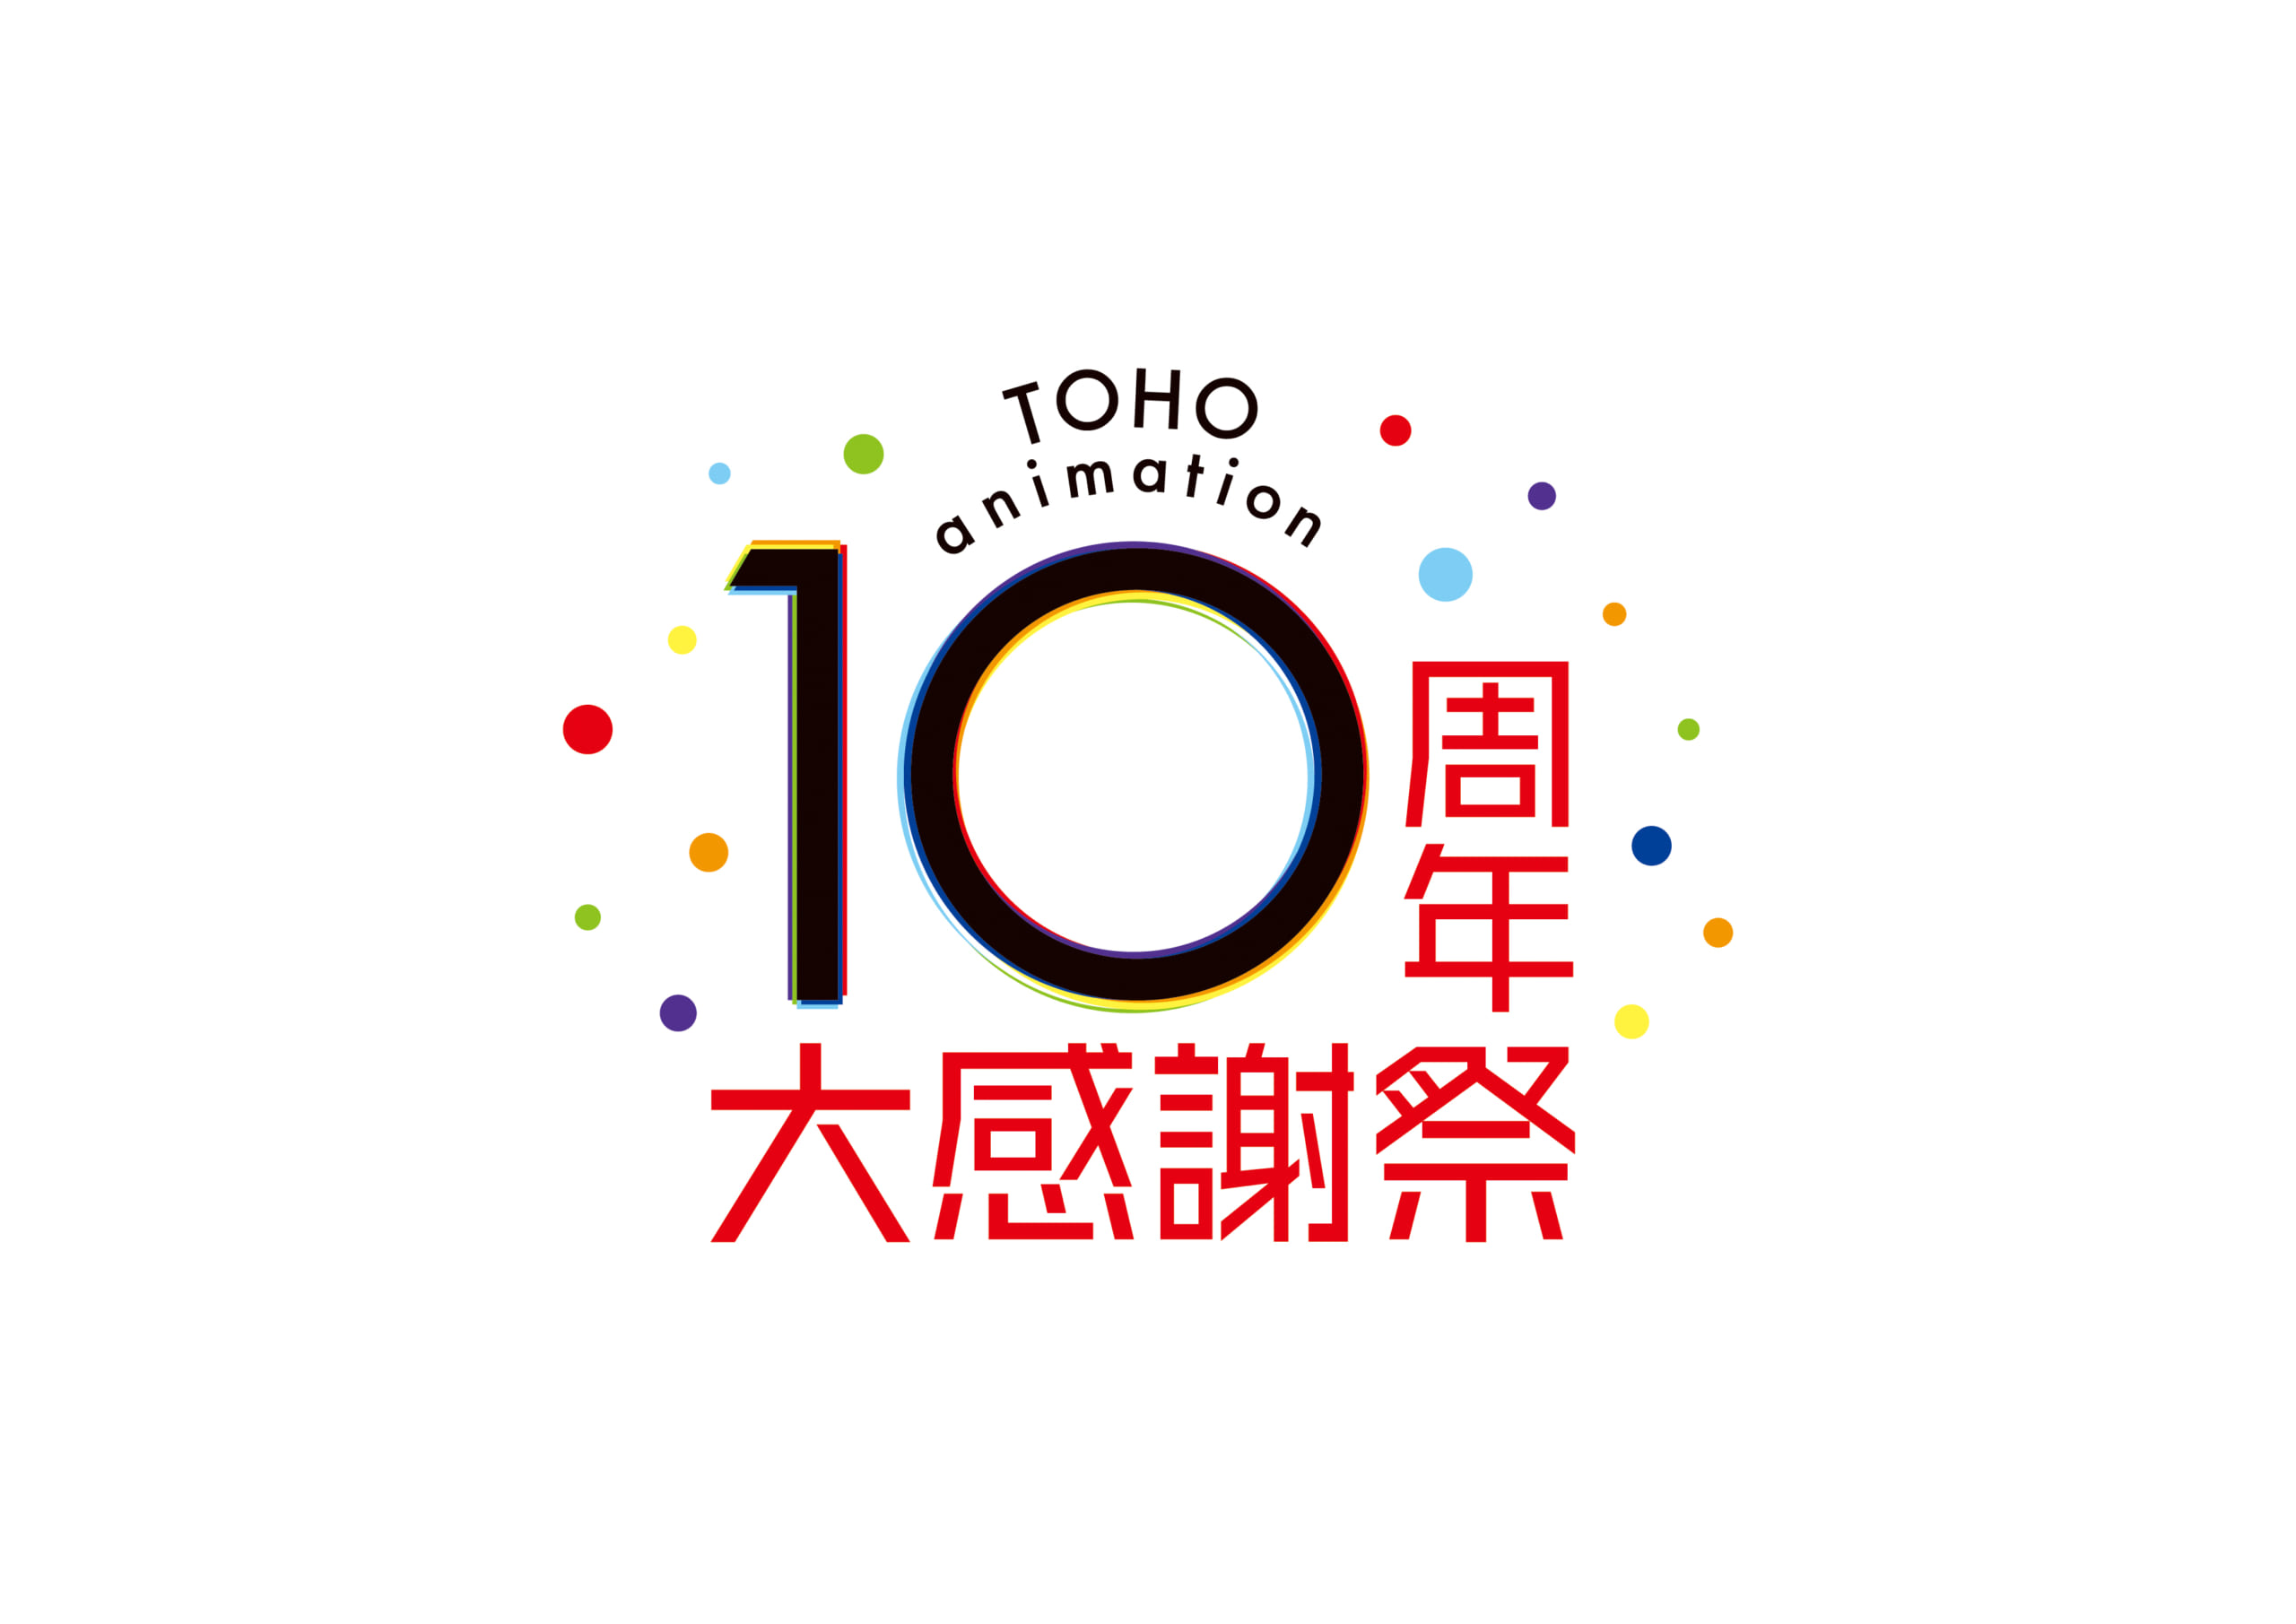 「TOHO animation 10周年大感謝祭」